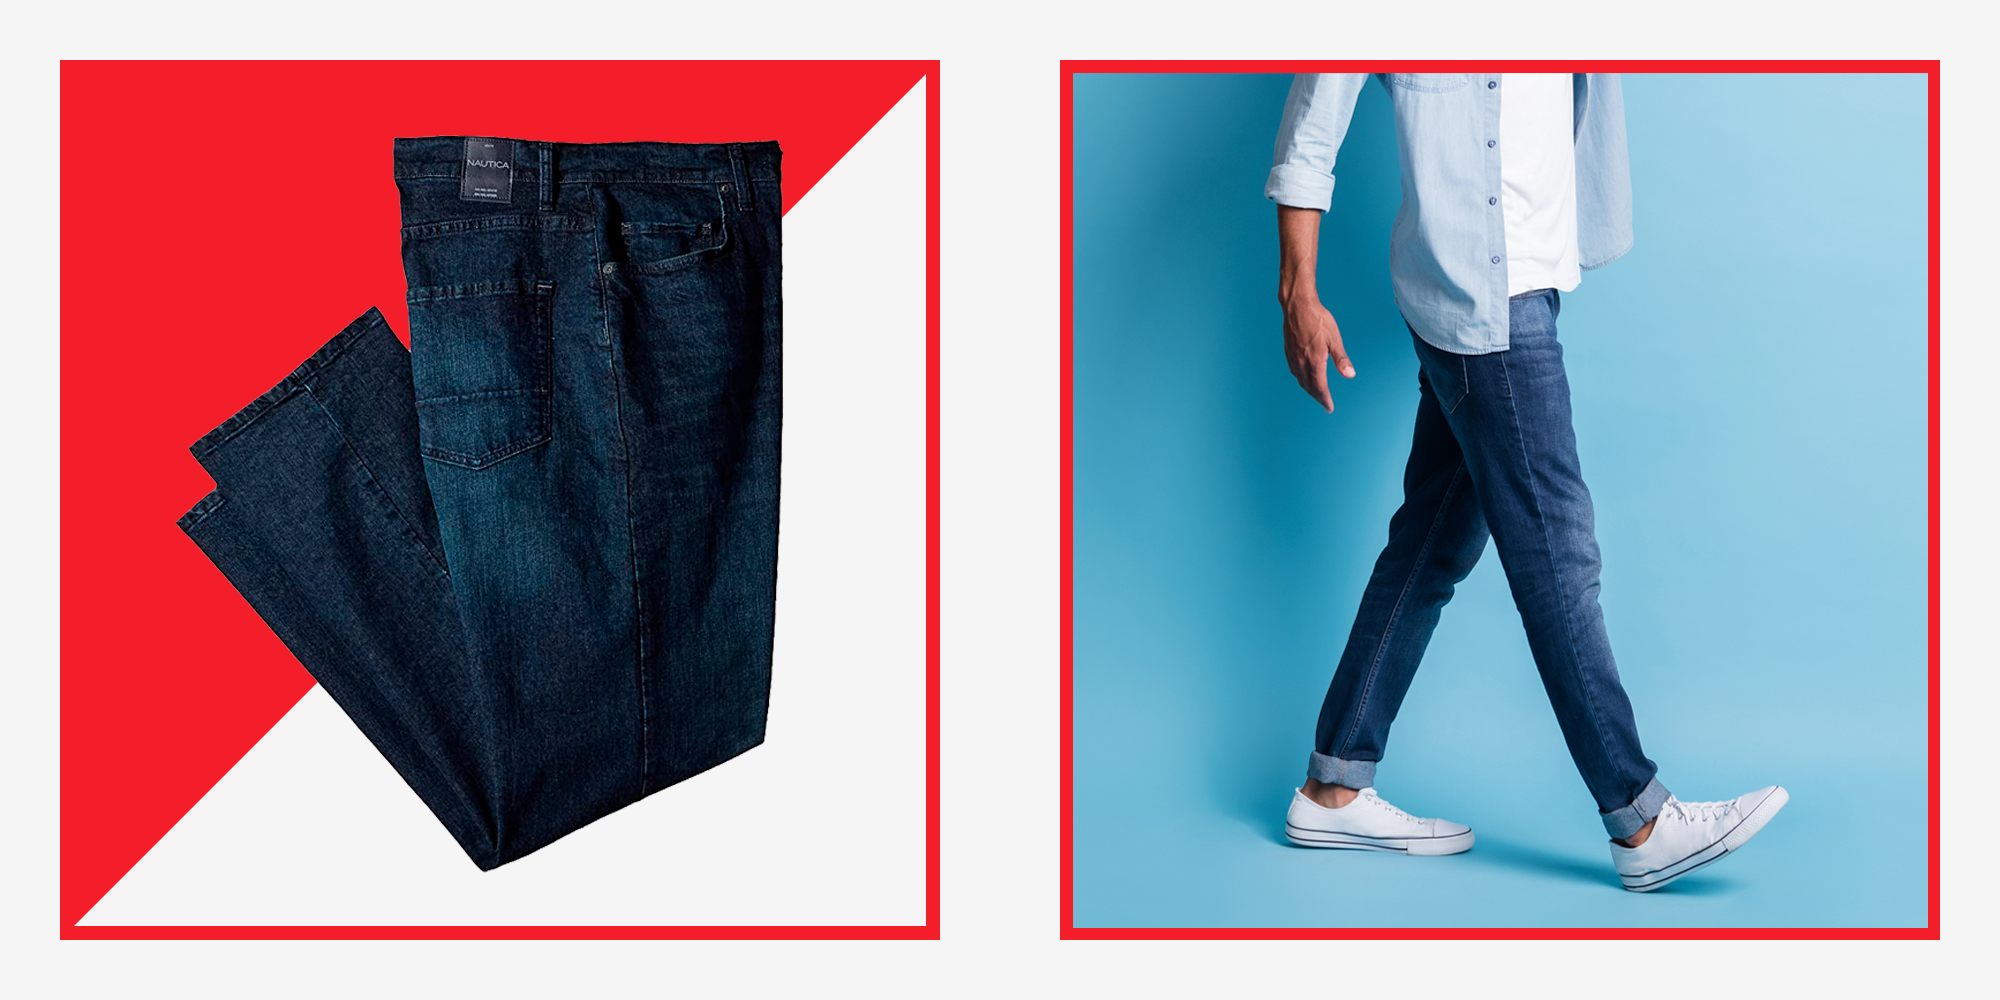 Buy Highlander Light Blue Straight Fit Stretchable Jeans for Men Online at  Rs.714 - Ketch